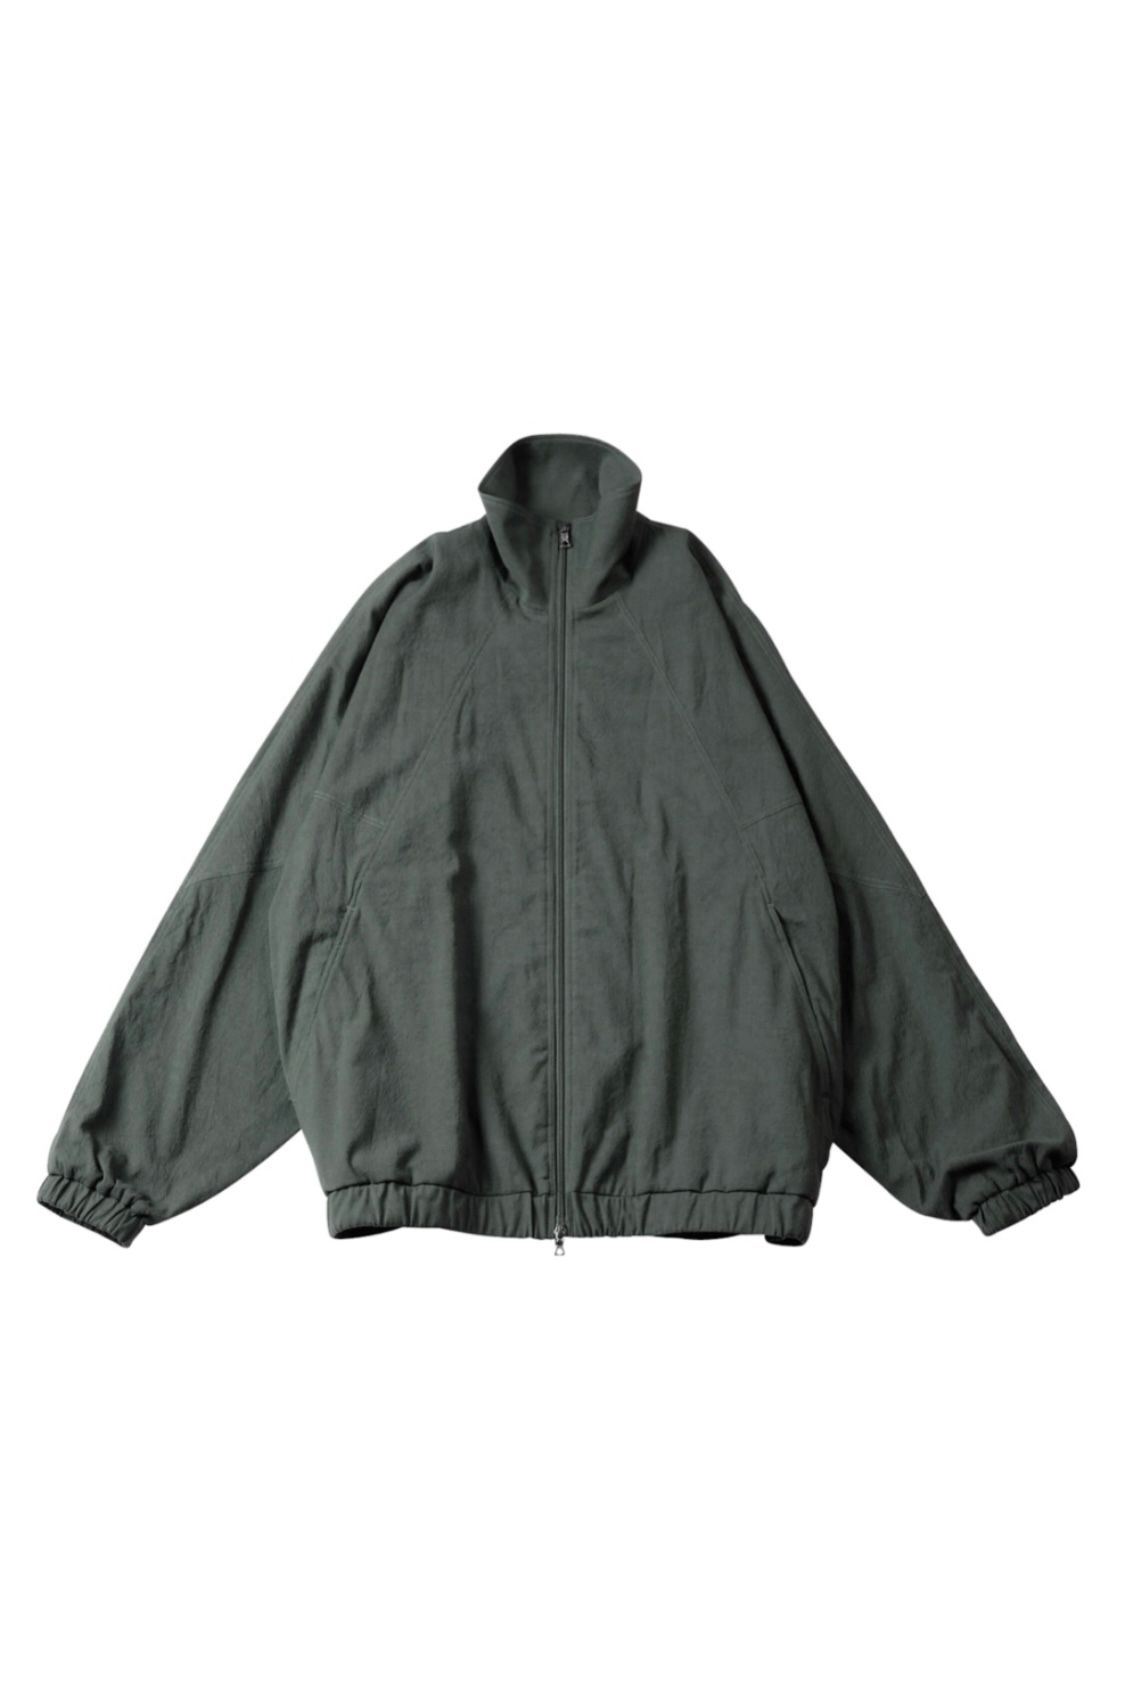 blurhms - Wool Rayon Silk Track Jacket-dark sage- 23ss men | asterisk